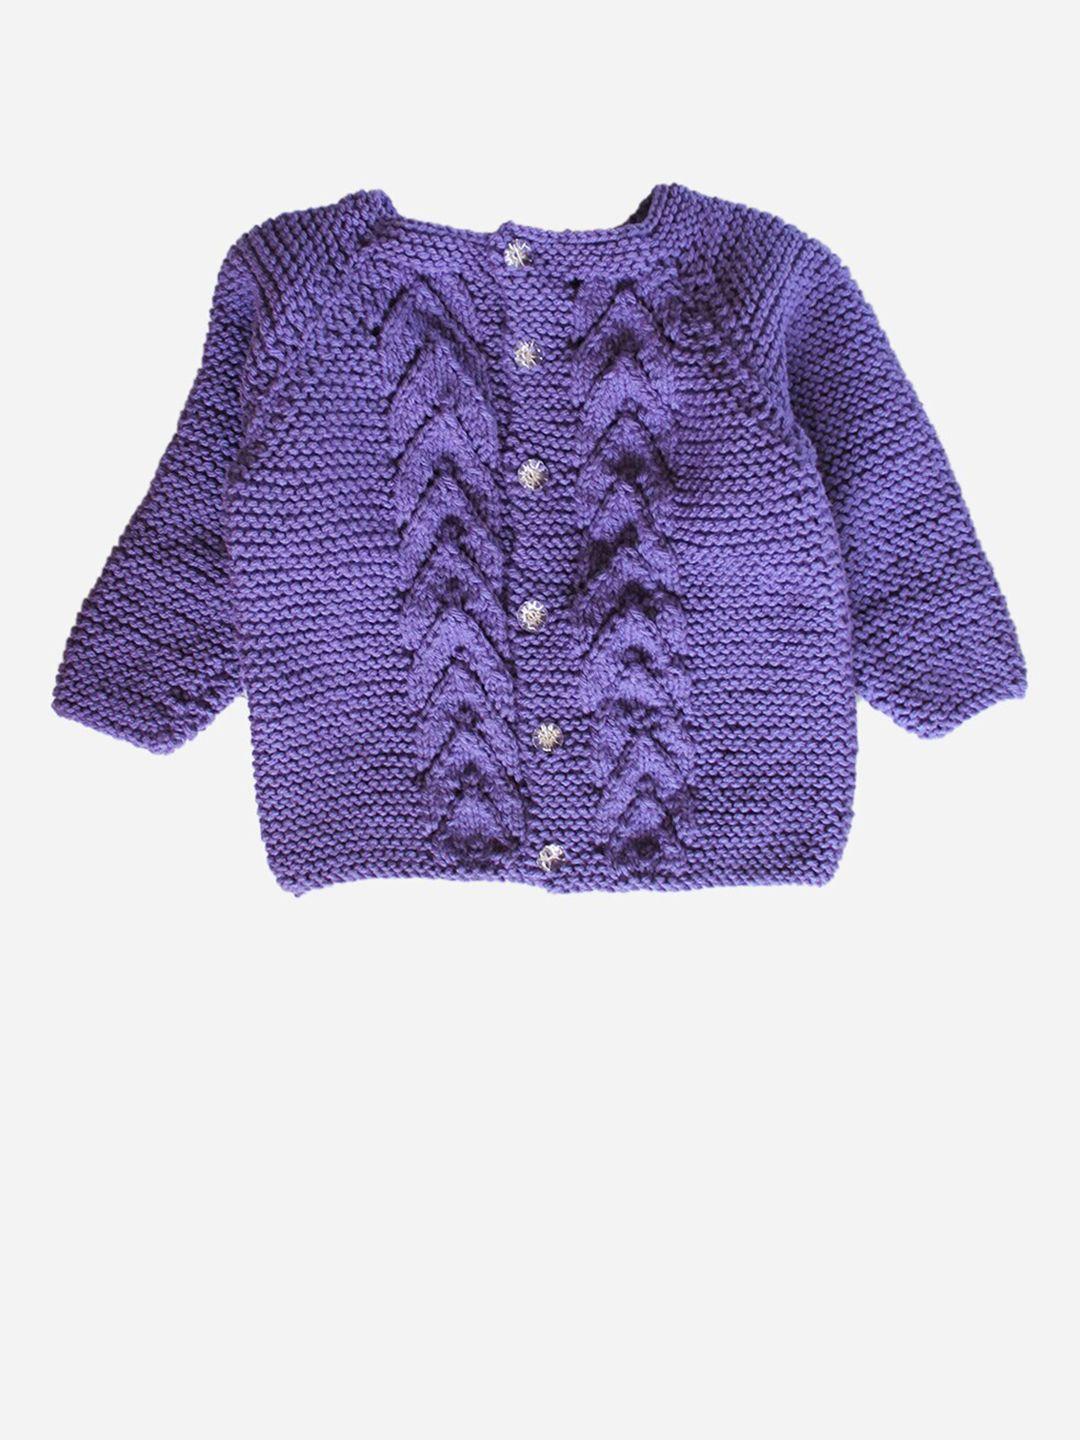 woonie unisex kids purple self design cardigan sweater